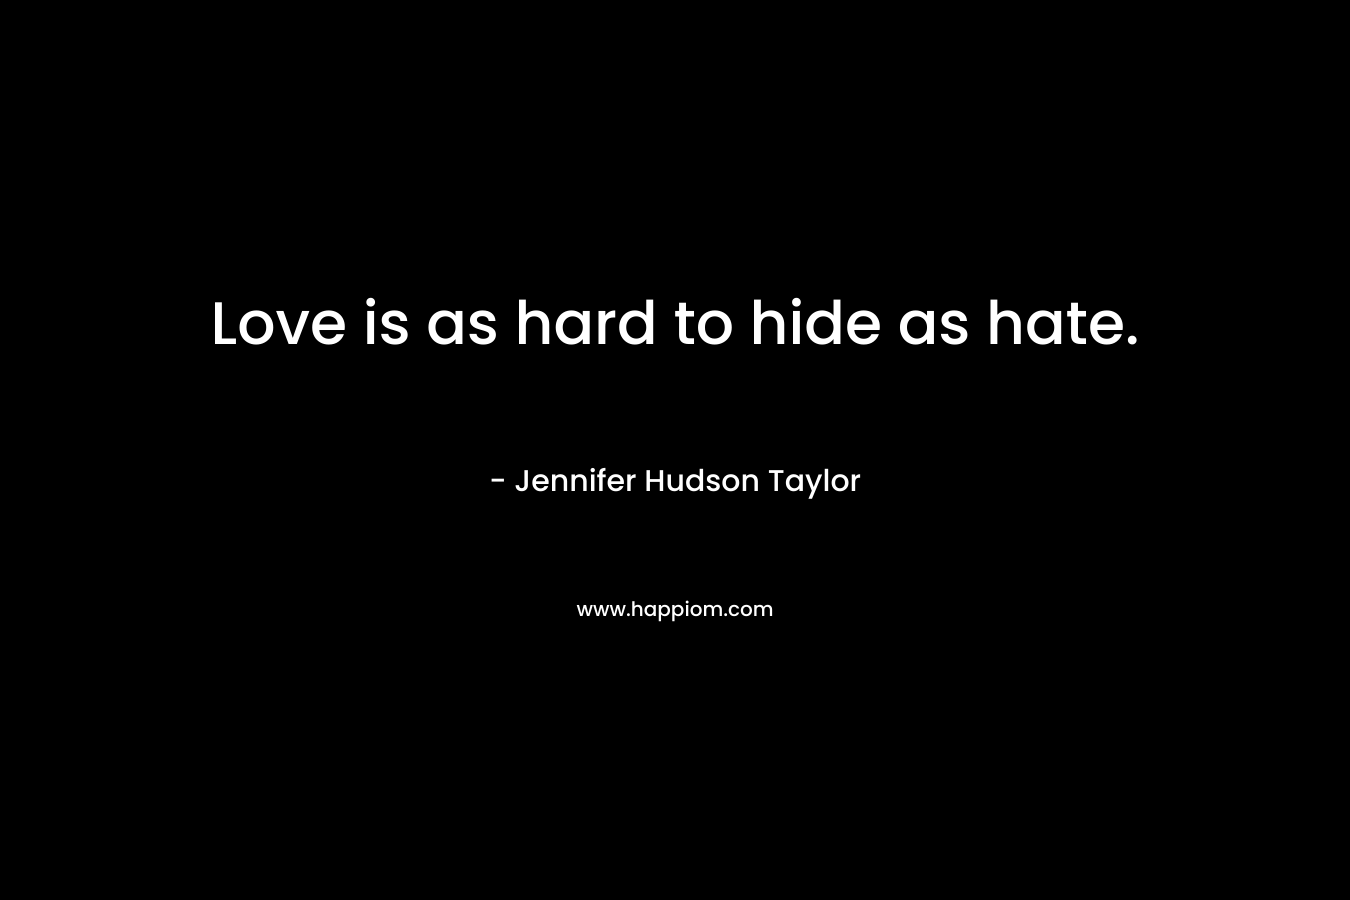 Love is as hard to hide as hate.